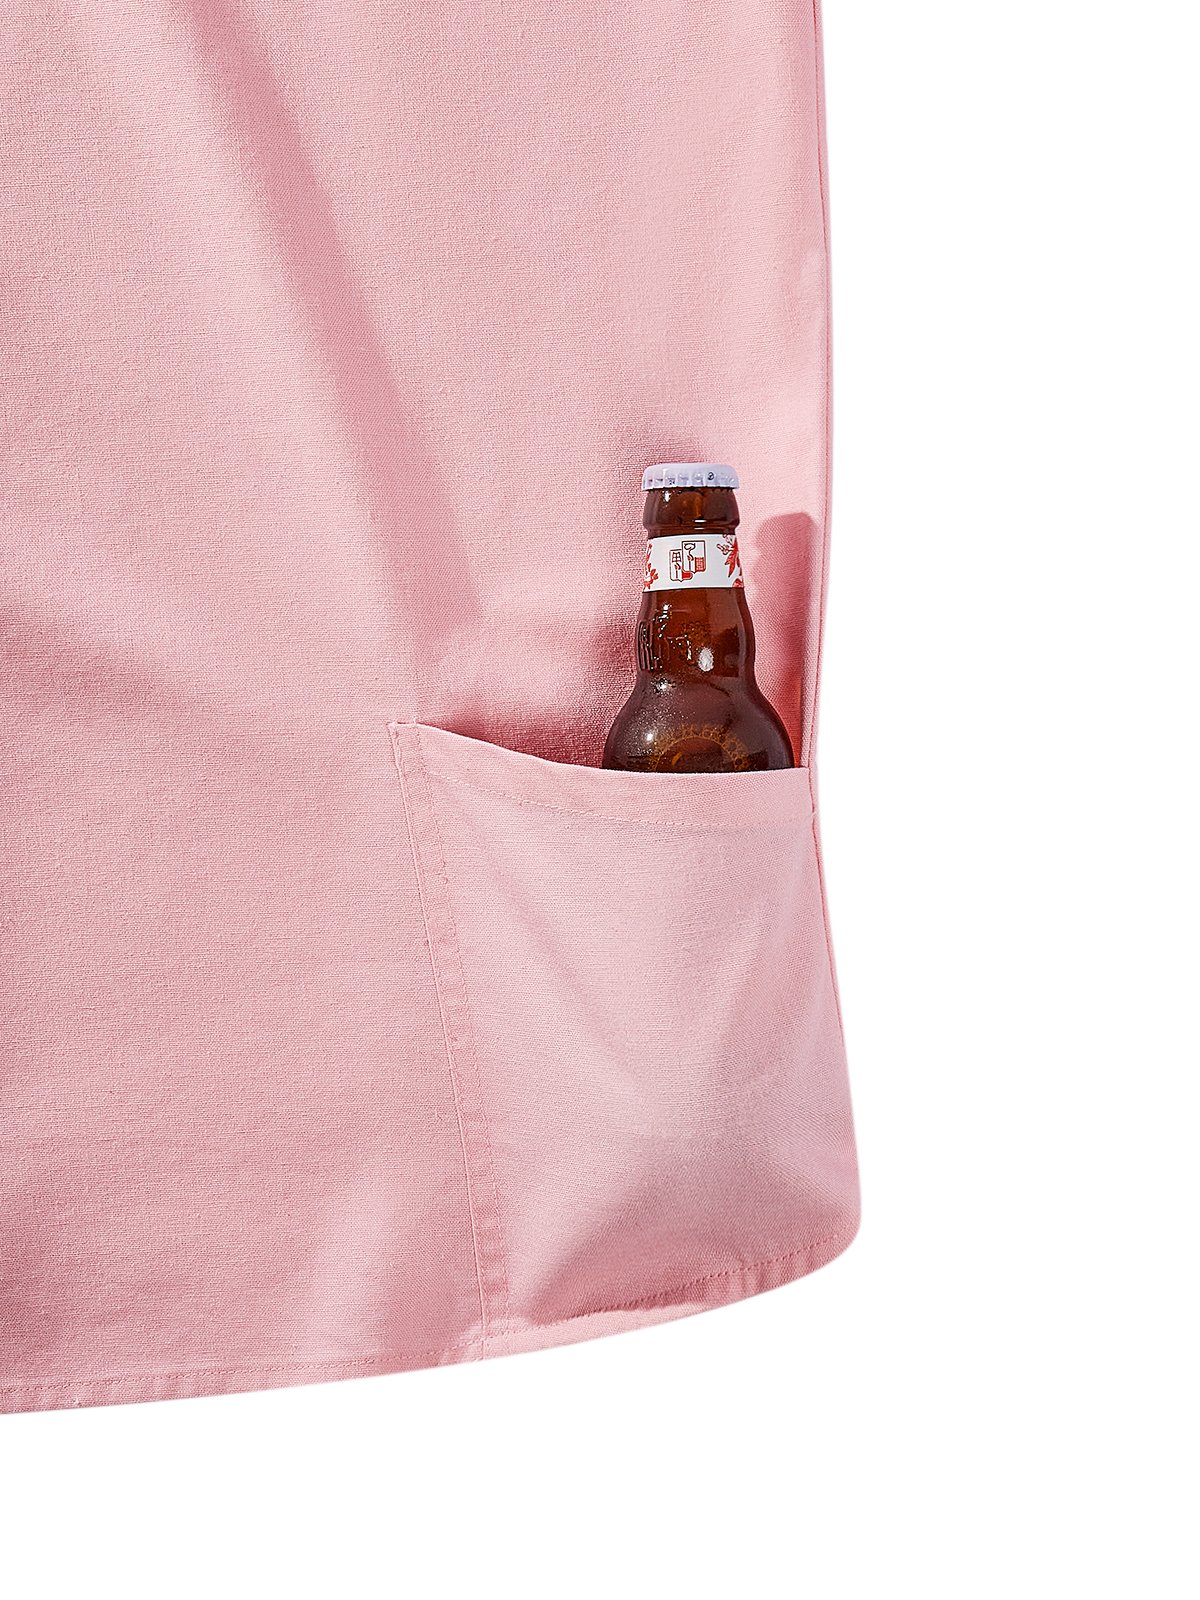 Hardaddy Cotton Beer Phone Pocket Outdoor Shirt